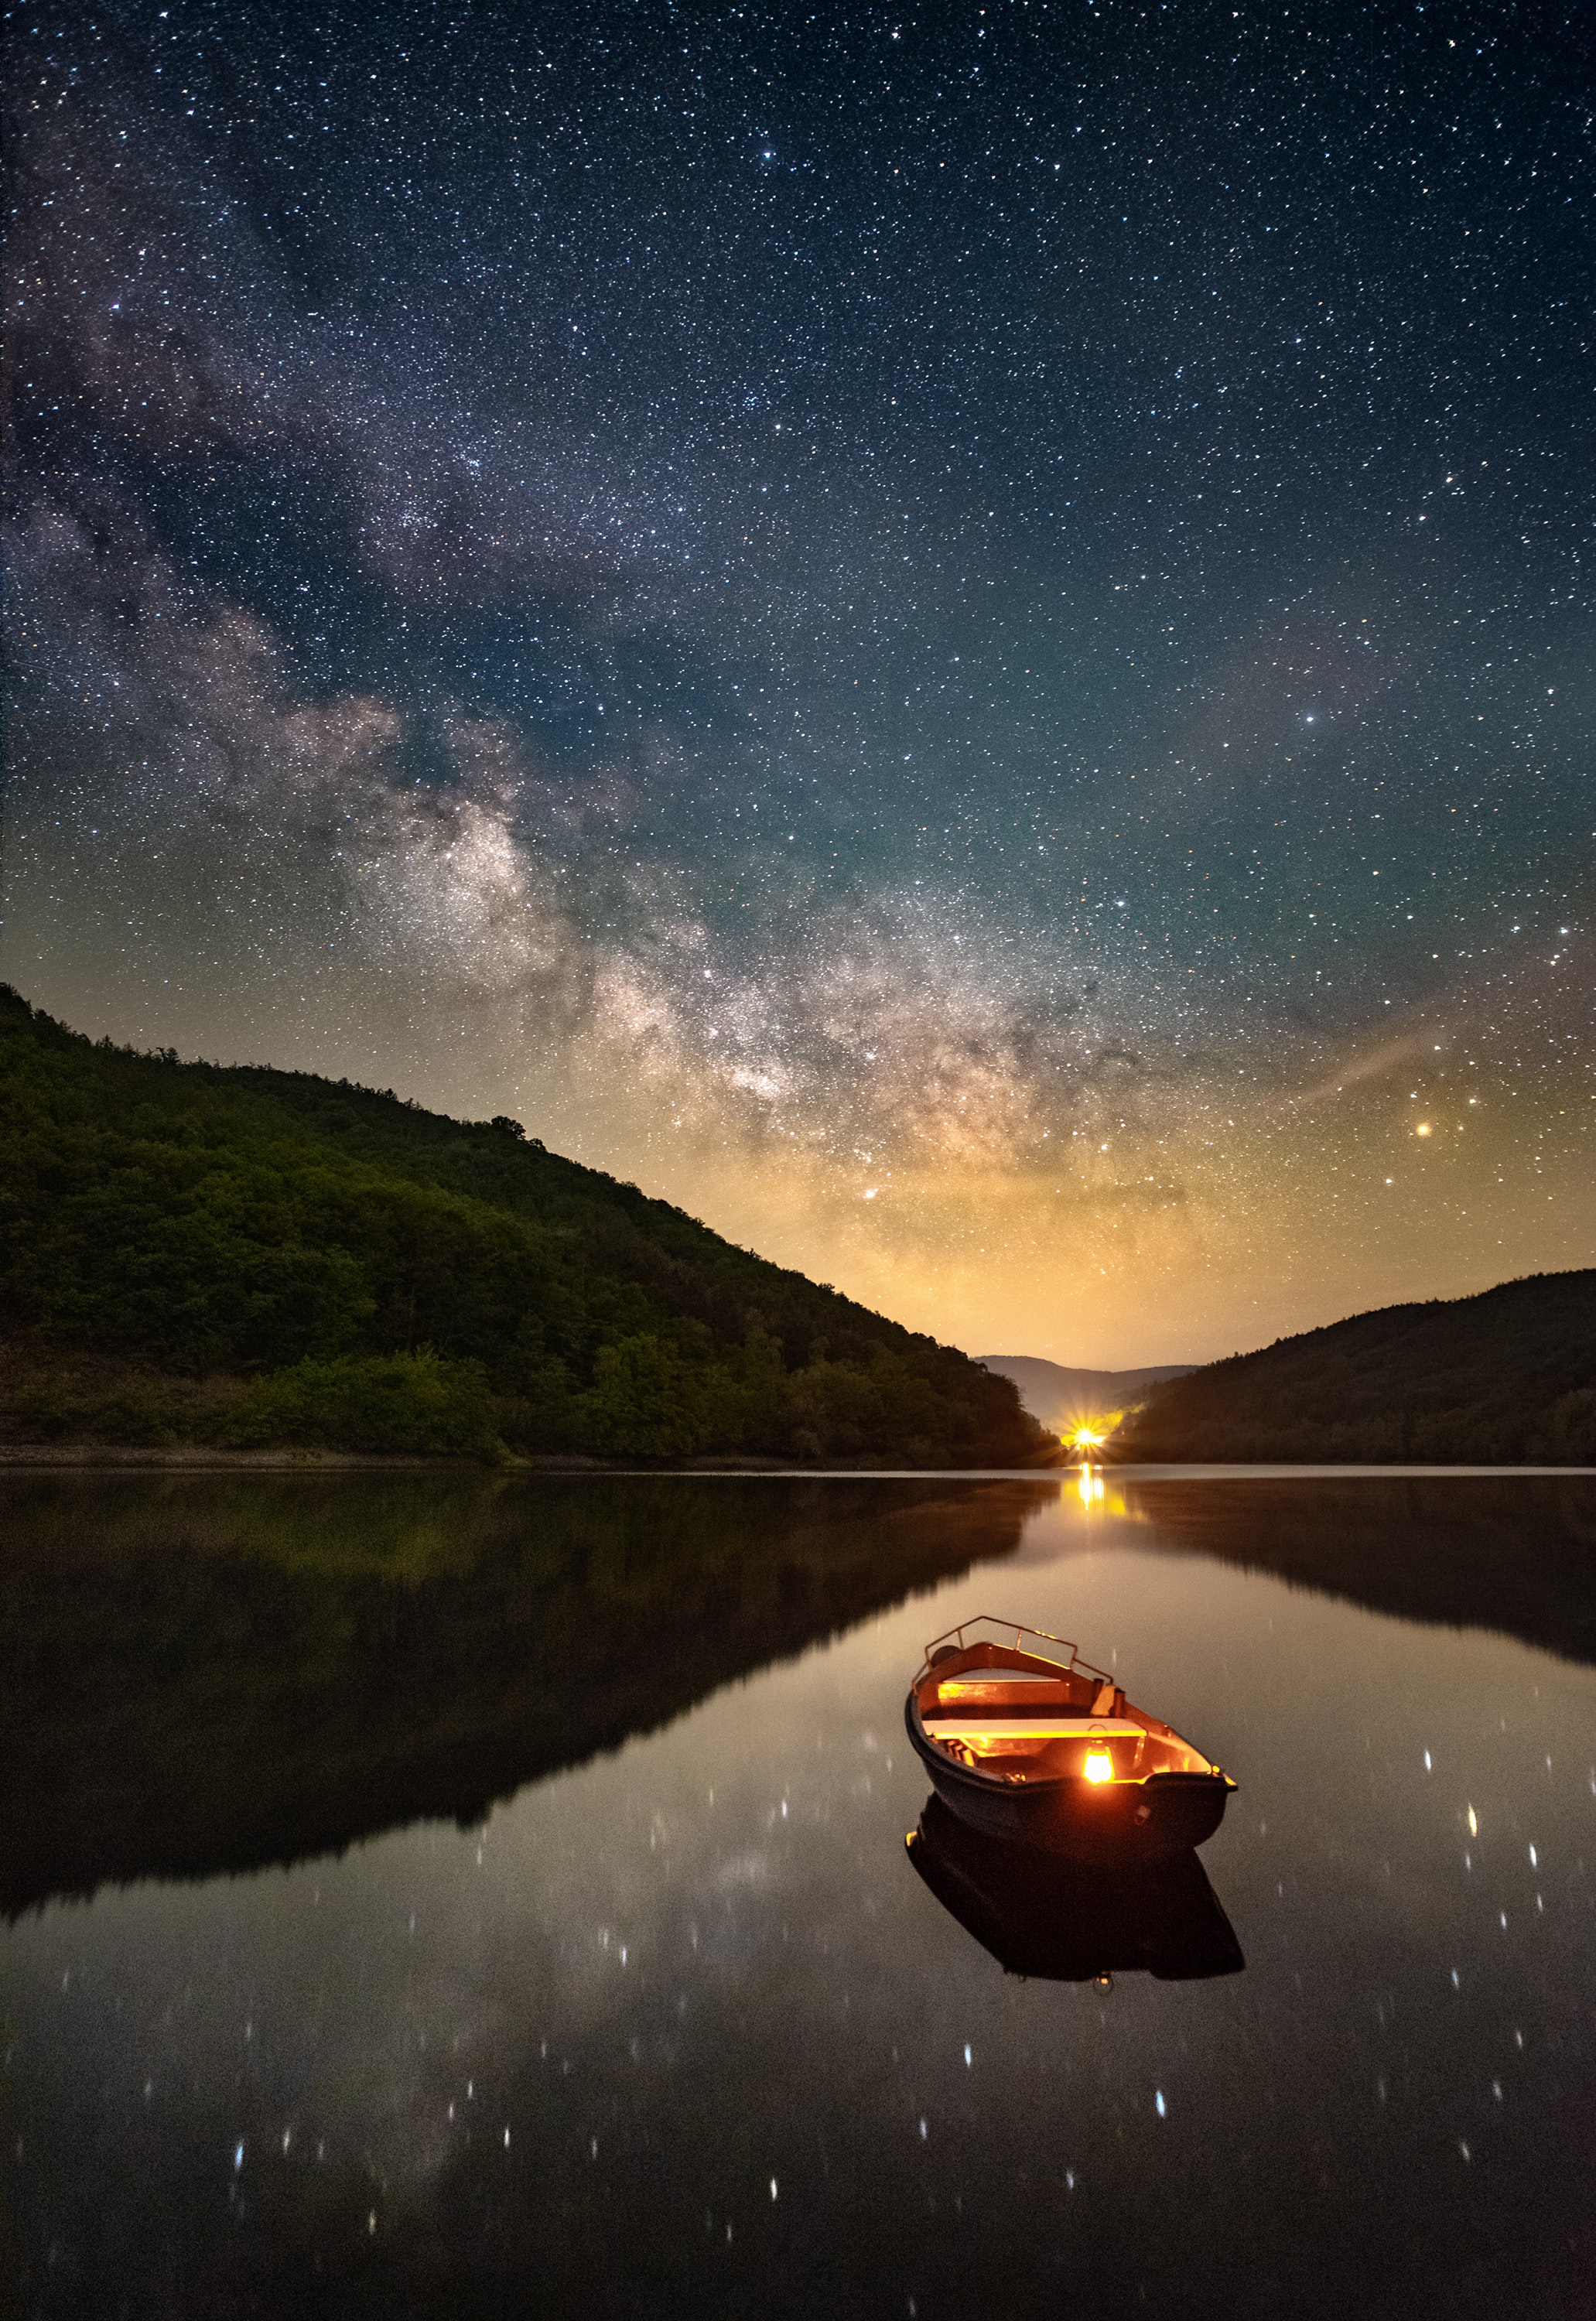 boat, lantern, nature, reflection, starry sky, lamp